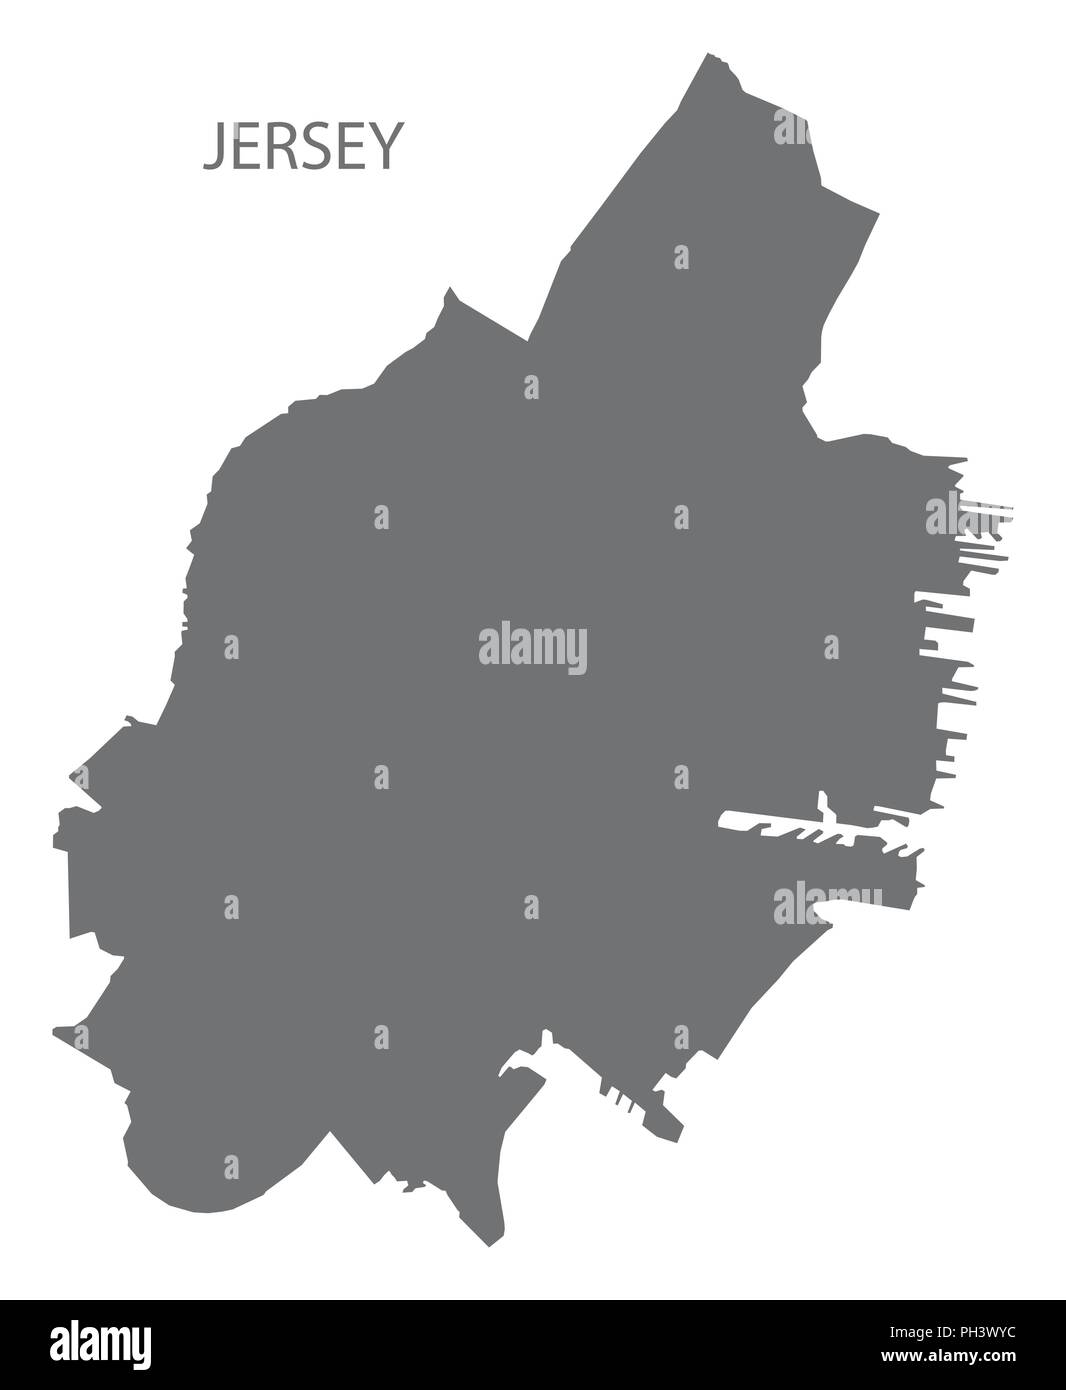 Jersey New Jersey city map grey illustration silhouette shape Stock ...